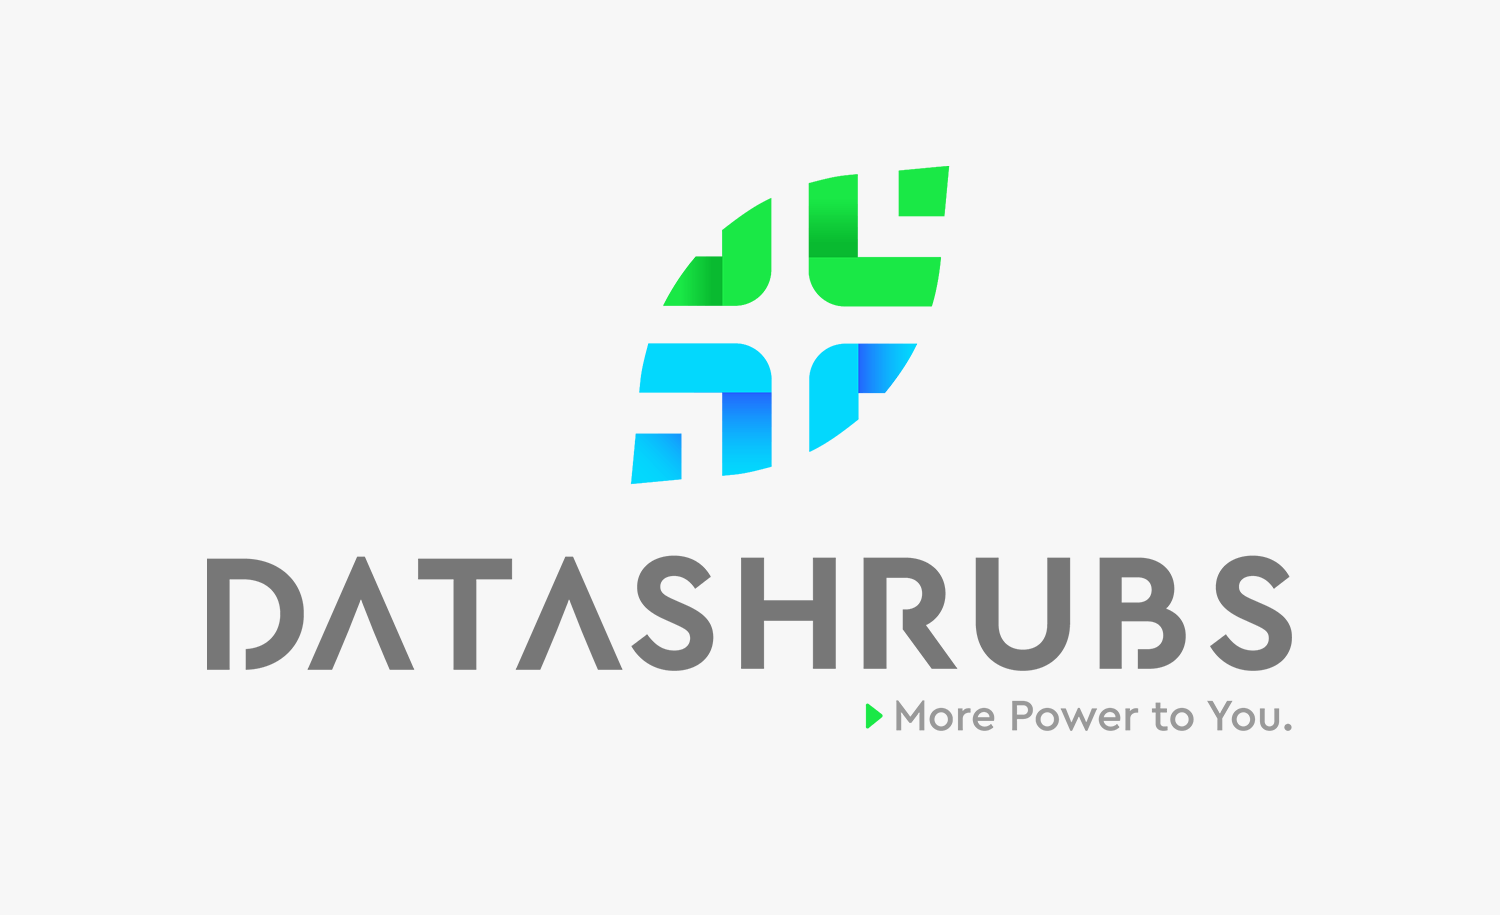 014_datashrubs-1